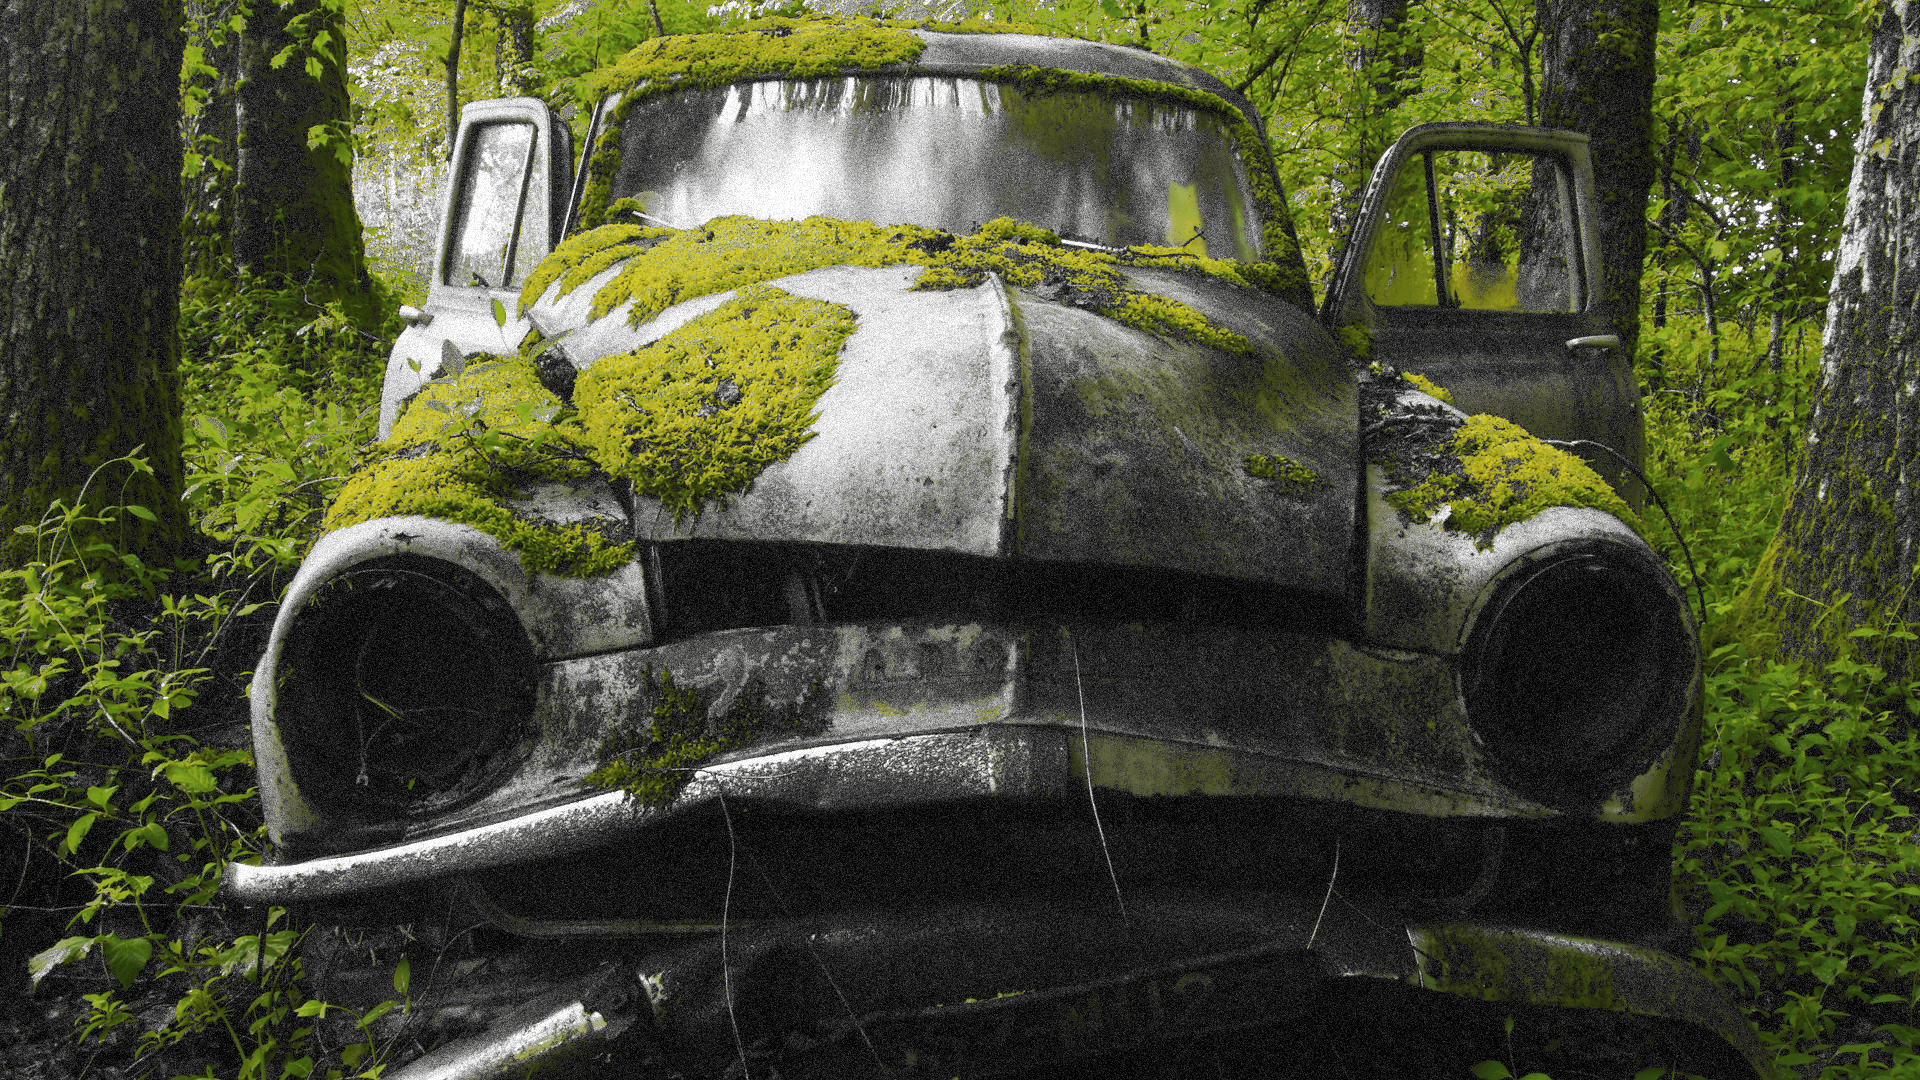 Old Car Images Free Download